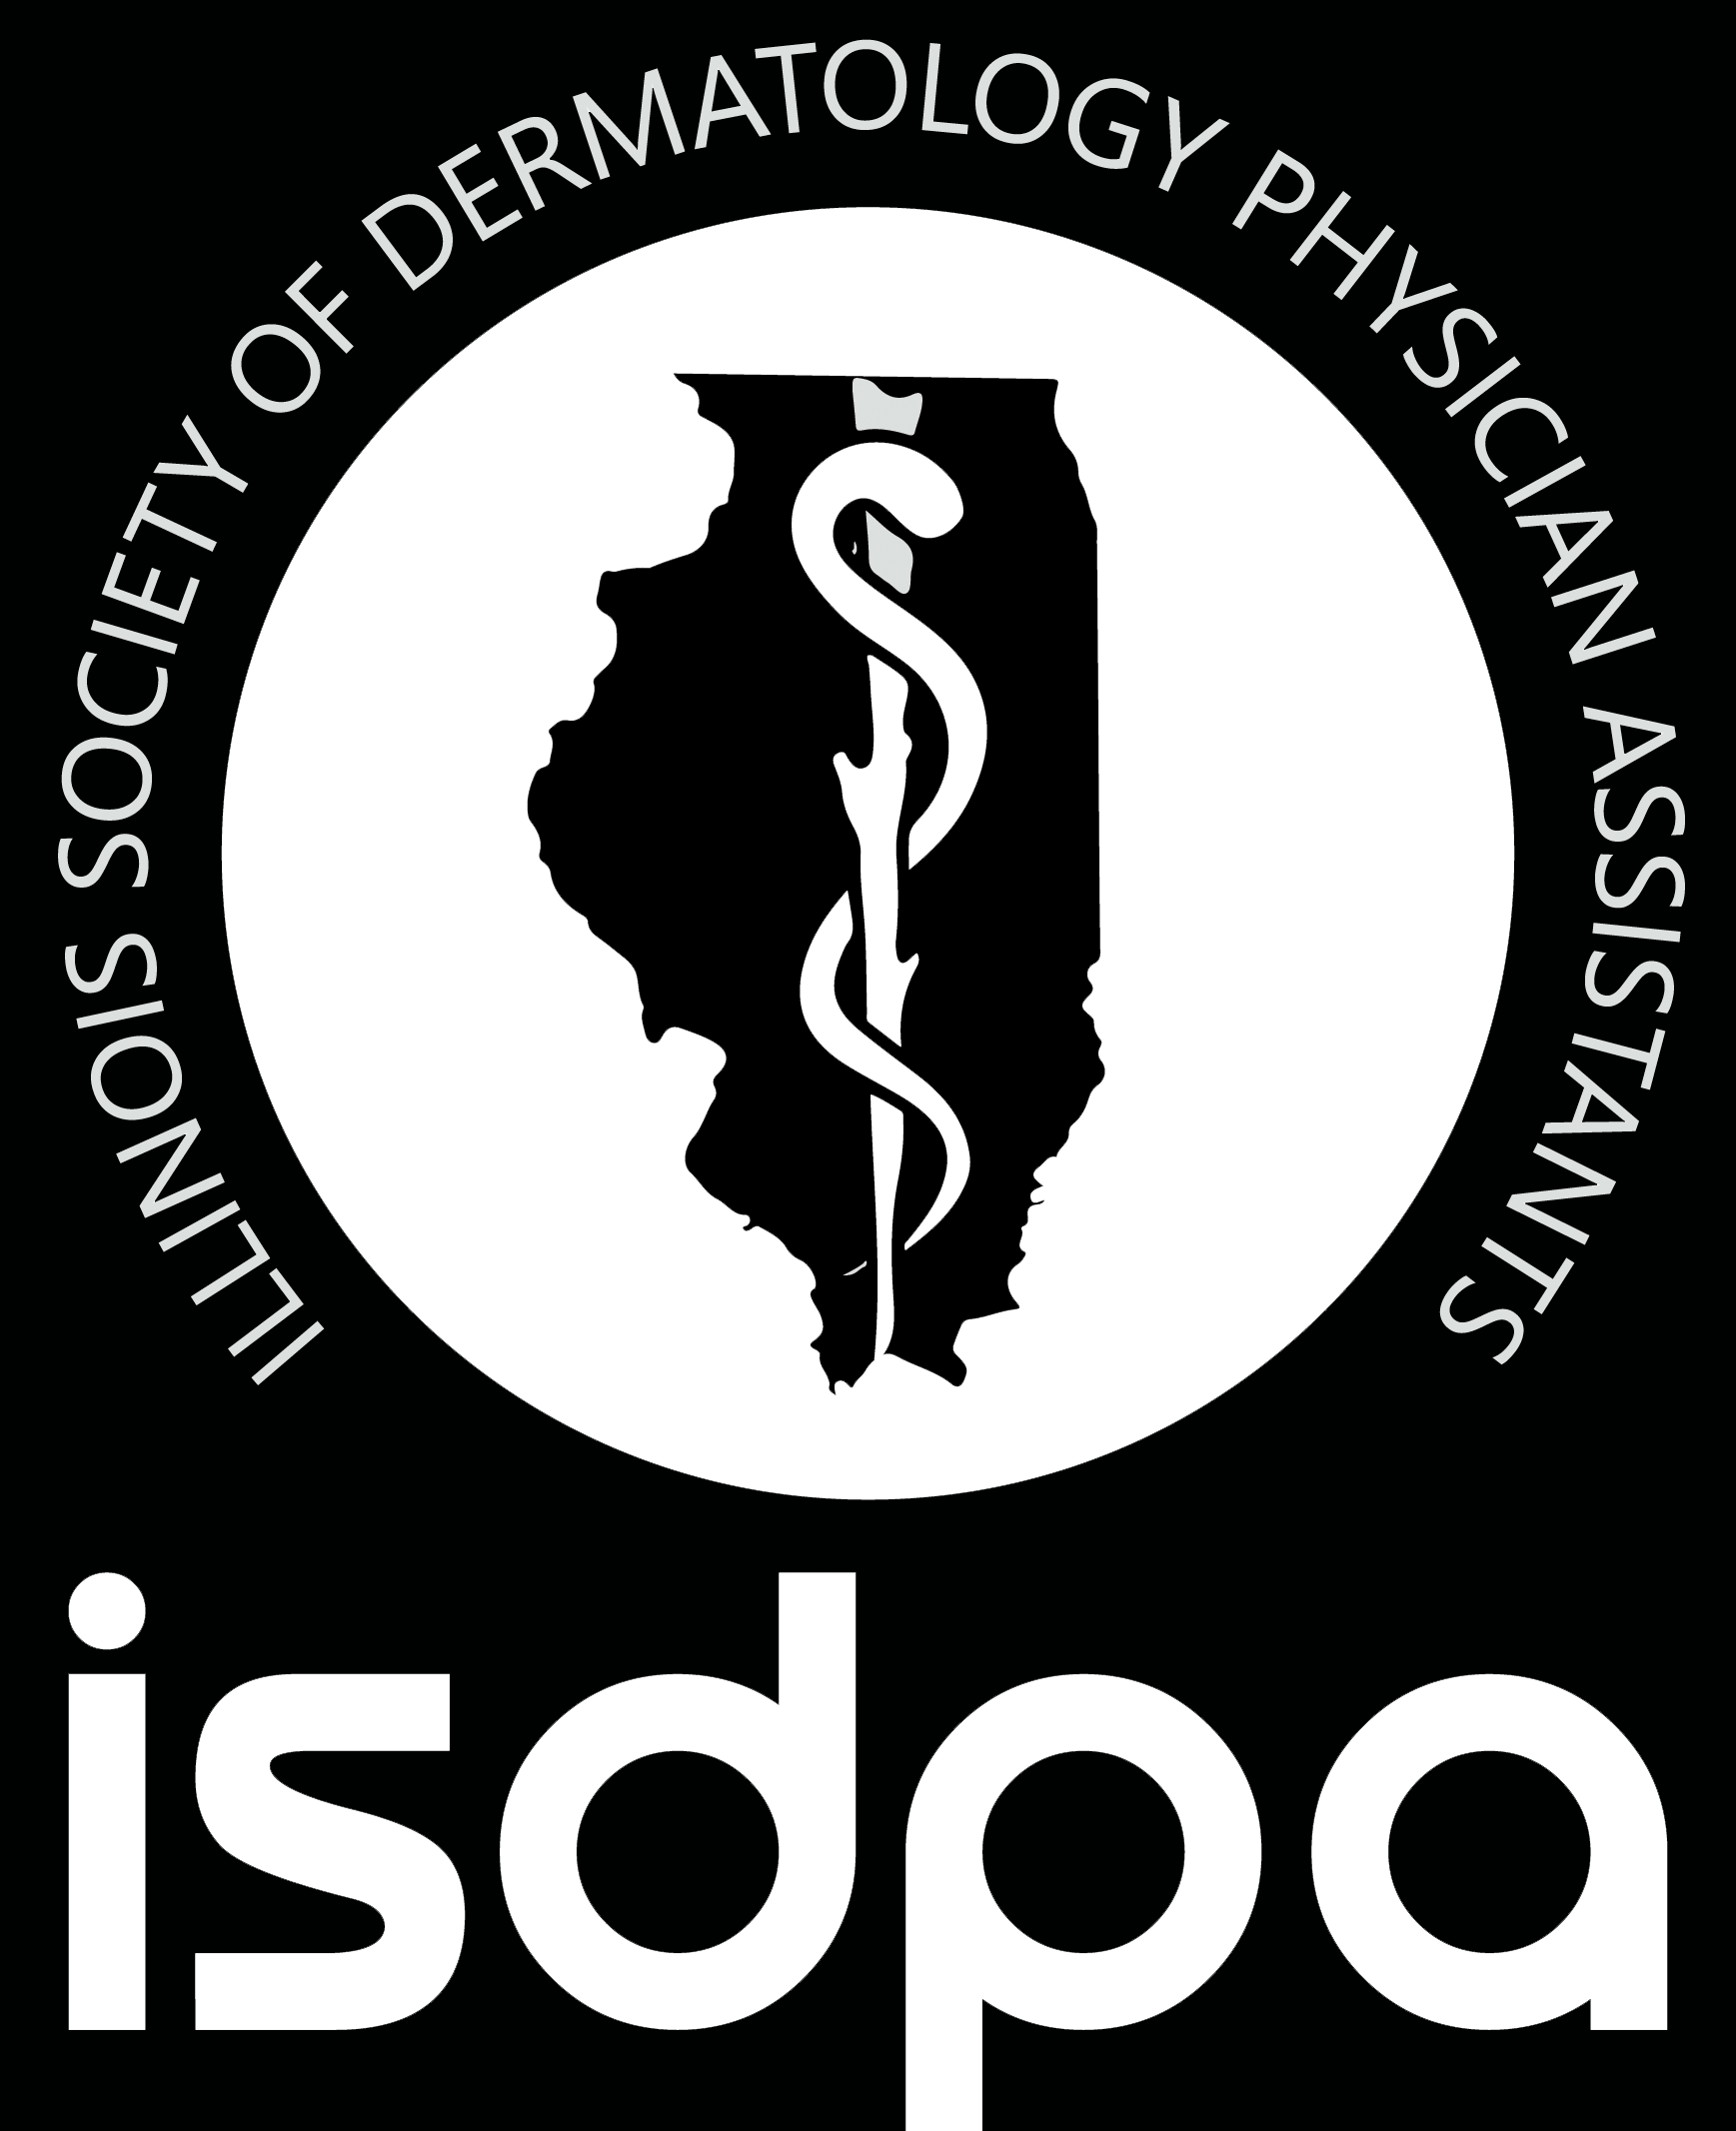 Illinois Society of Dermatology Physician Assistants